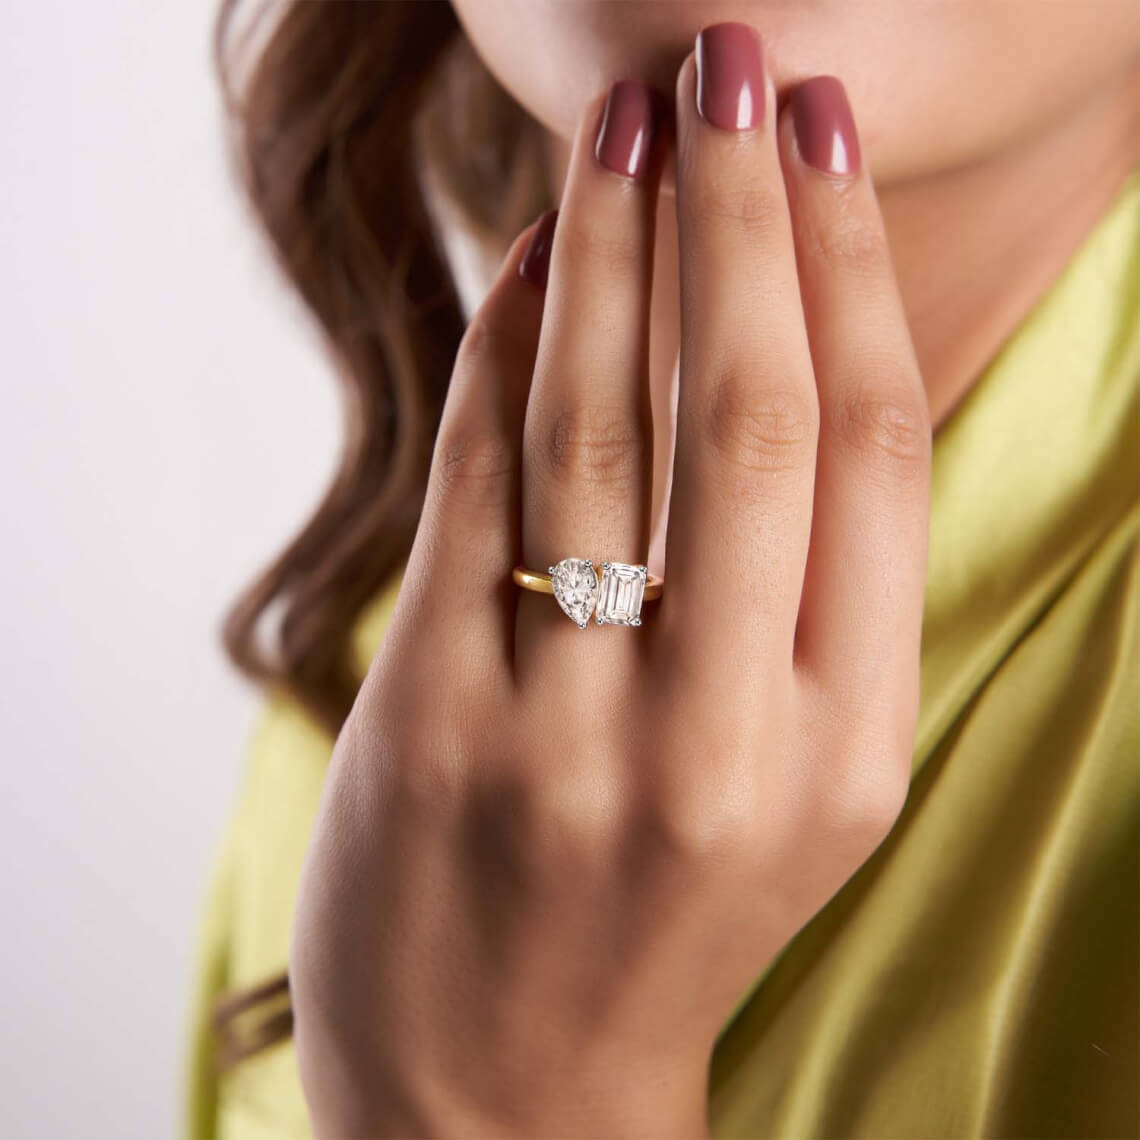 Megan Fox Engagement Ring: Gem that Stole Our Heart